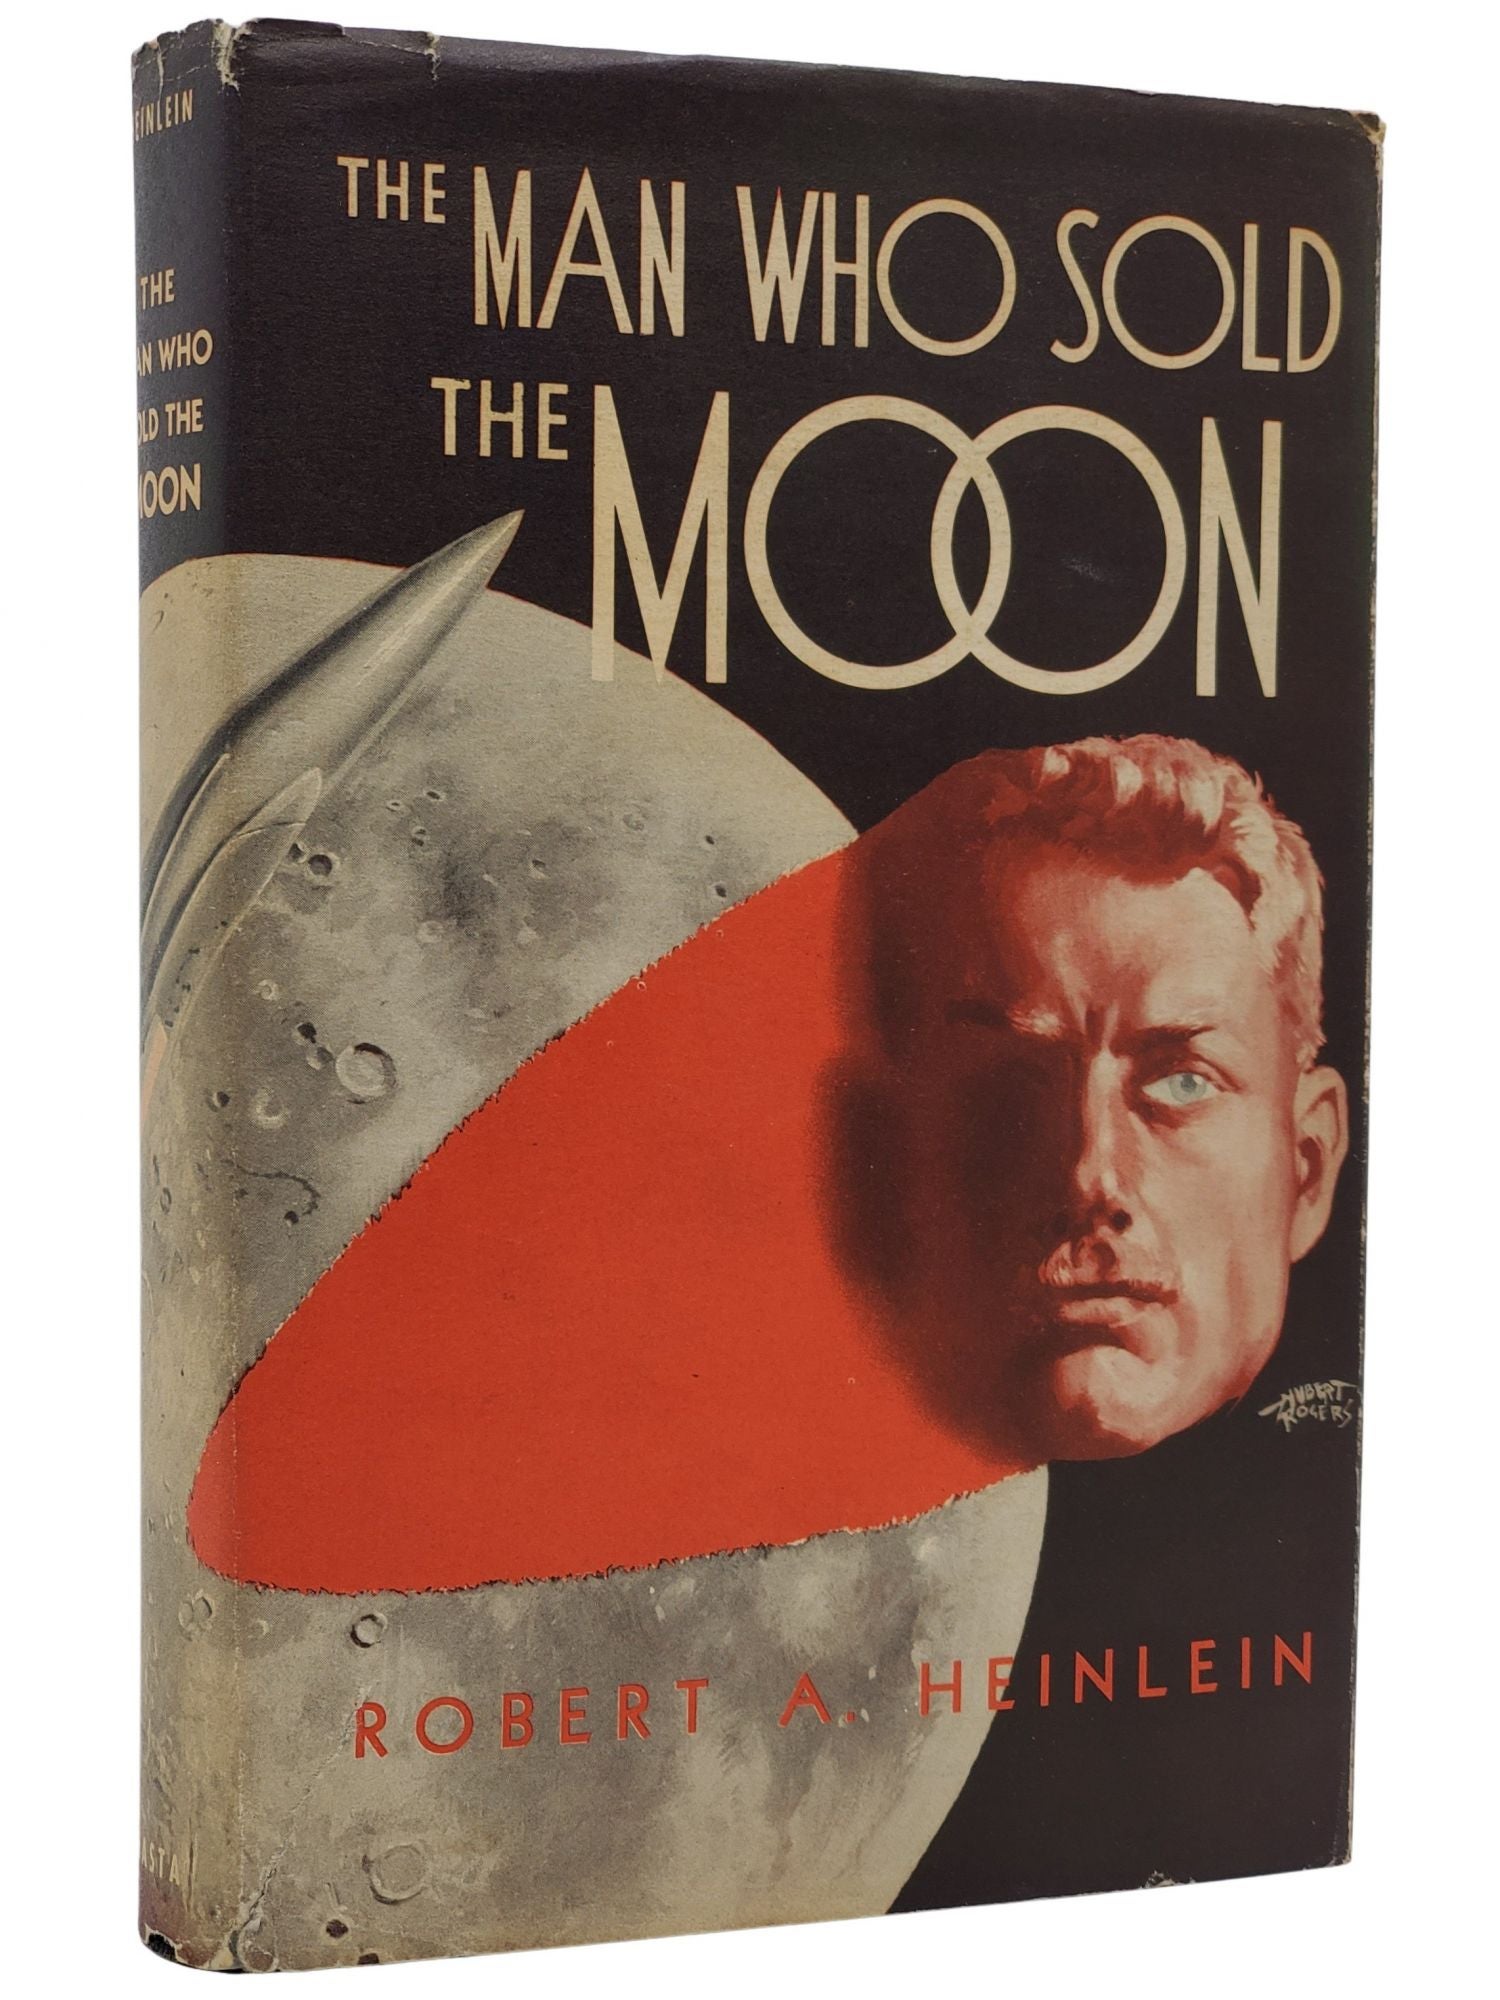 [Book #50600] THE MAN WHO SOLD THE MOON. Robert A. Heinlein.